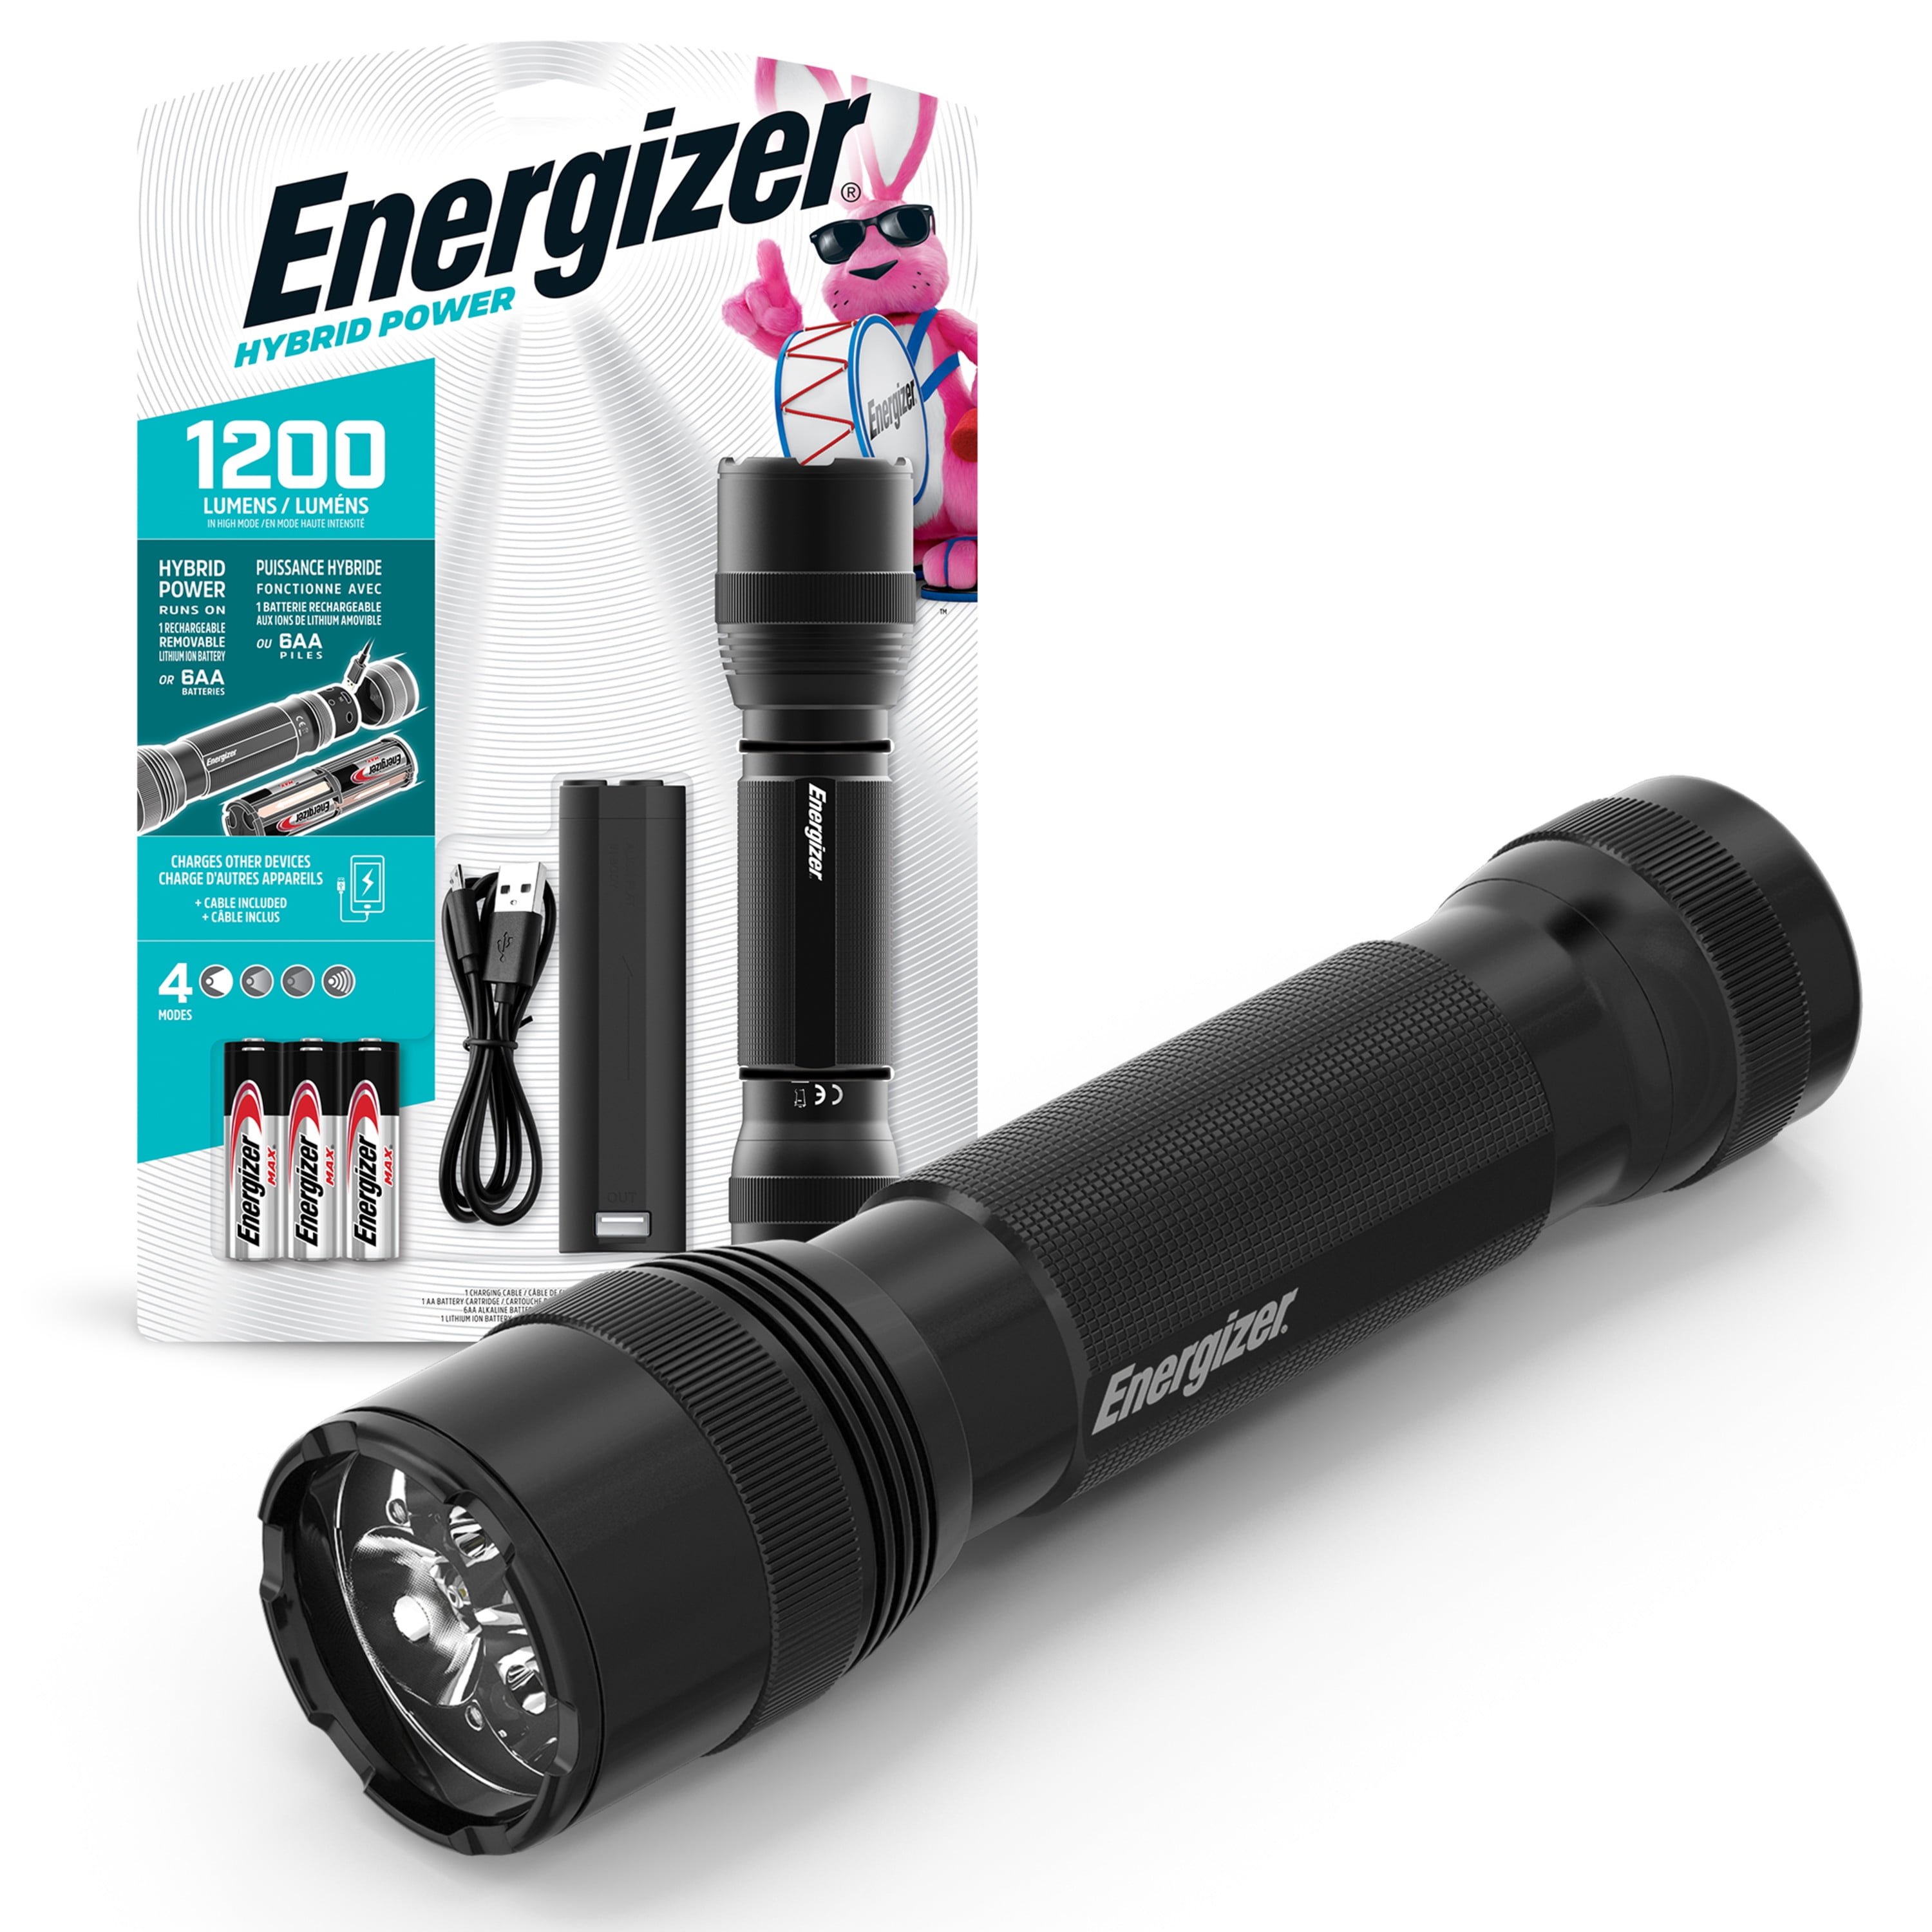 Energizer Tactical LED Light, 1200 Lumen, IPX4, Aluminum Body - Walmart.com